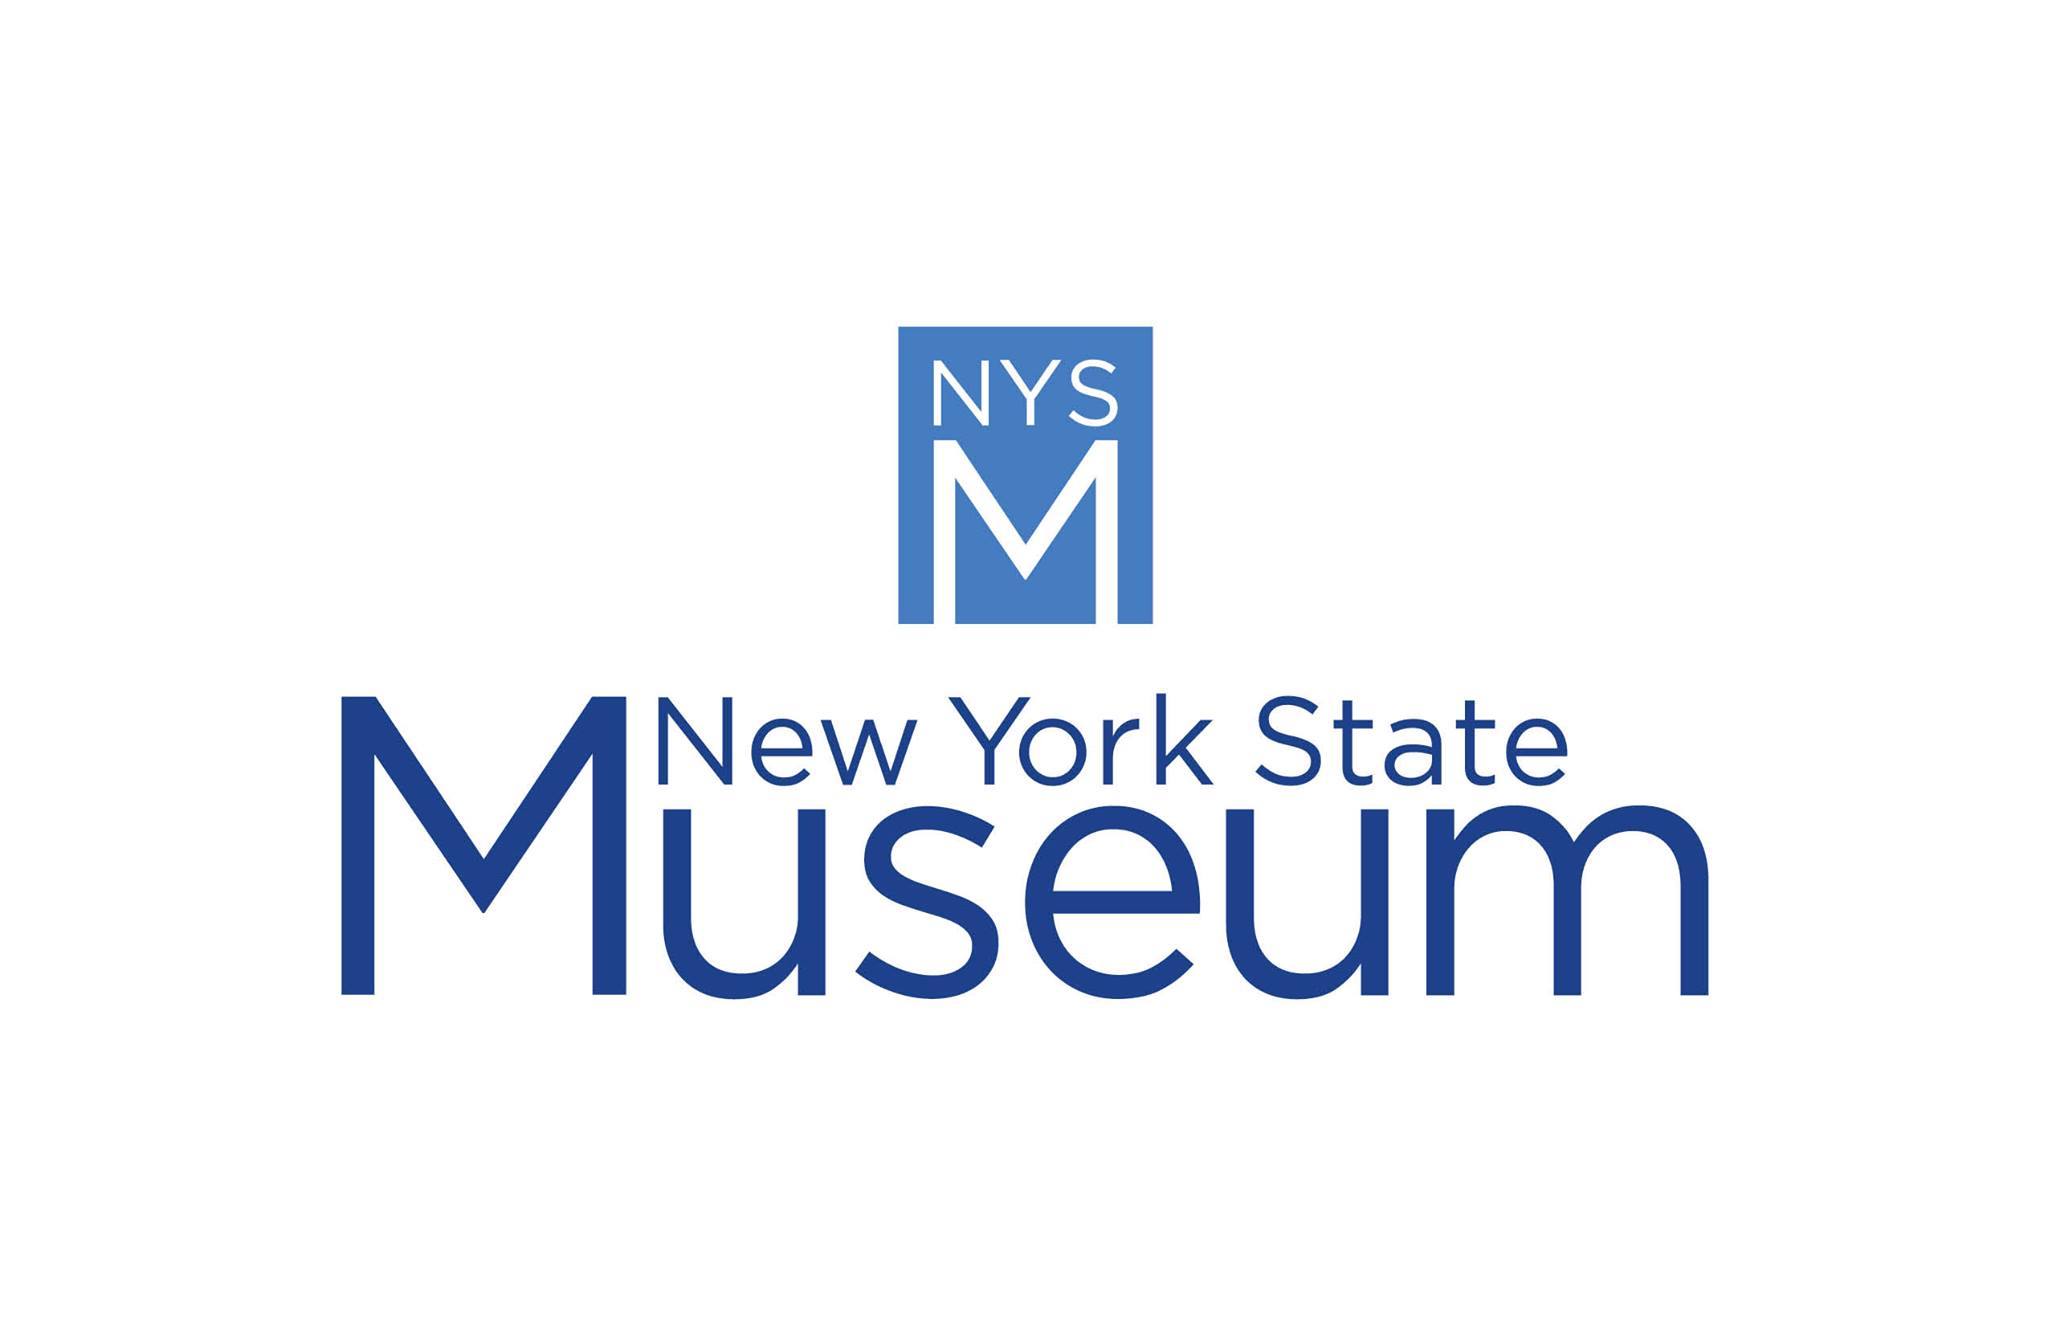 New York State Museum|Park|Travel